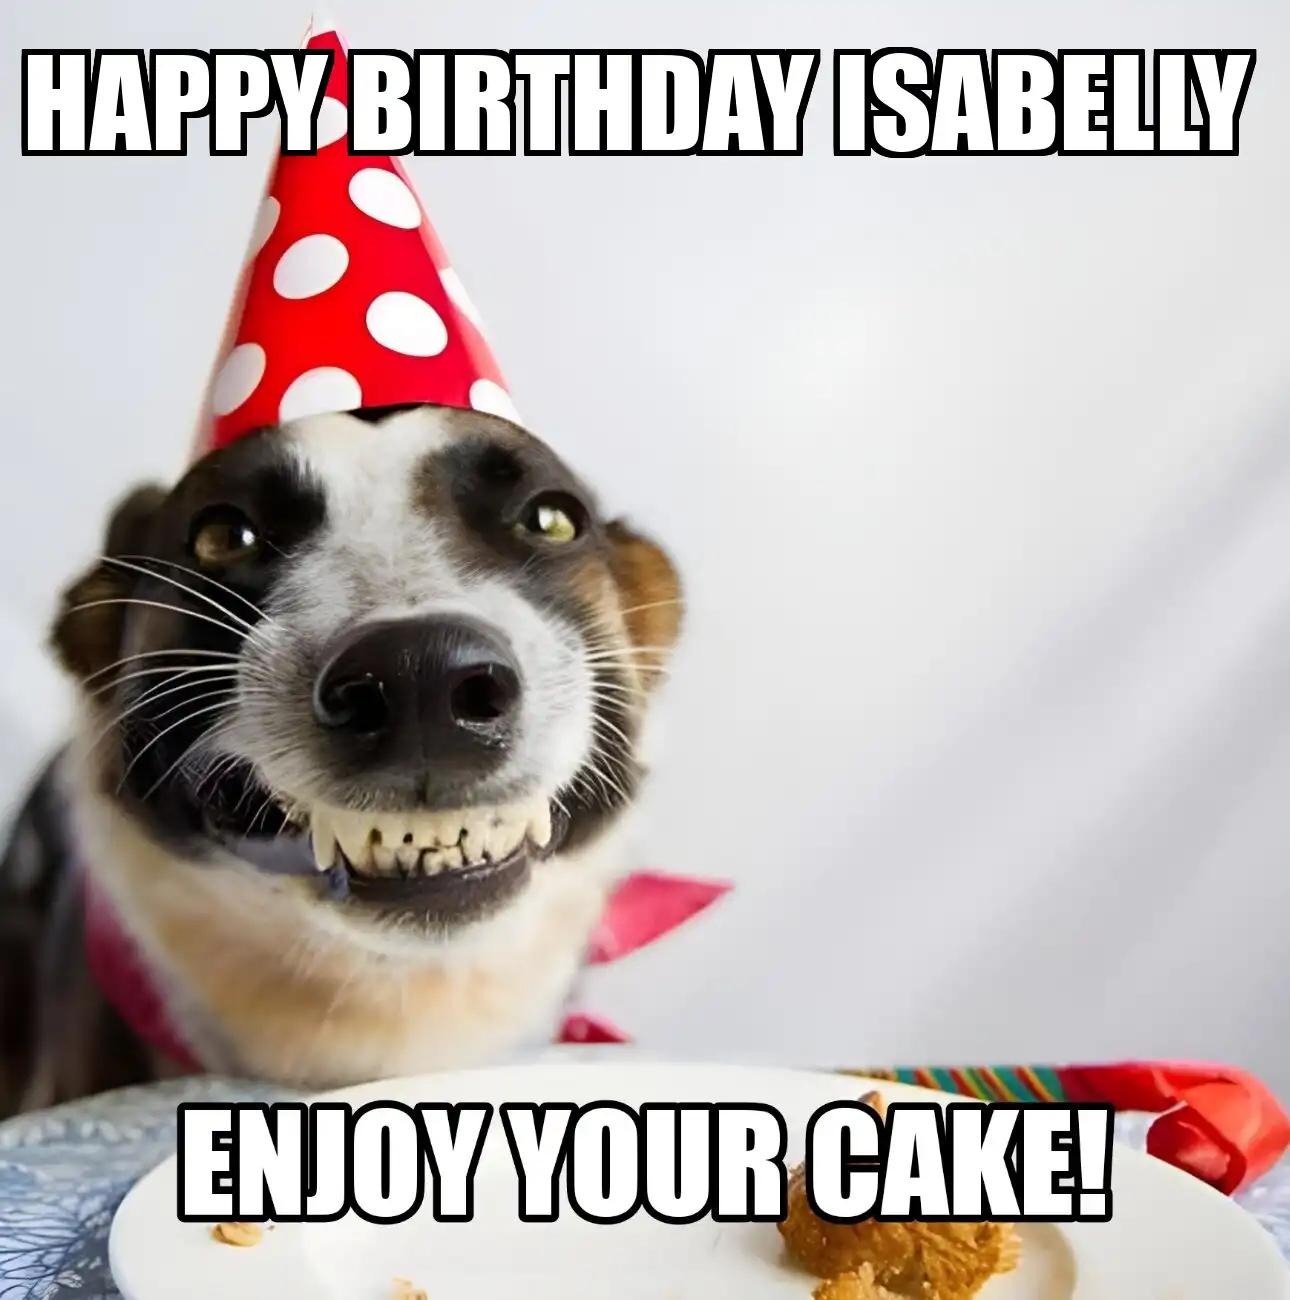 Happy Birthday Isabelly Enjoy Your Cake Dog Meme